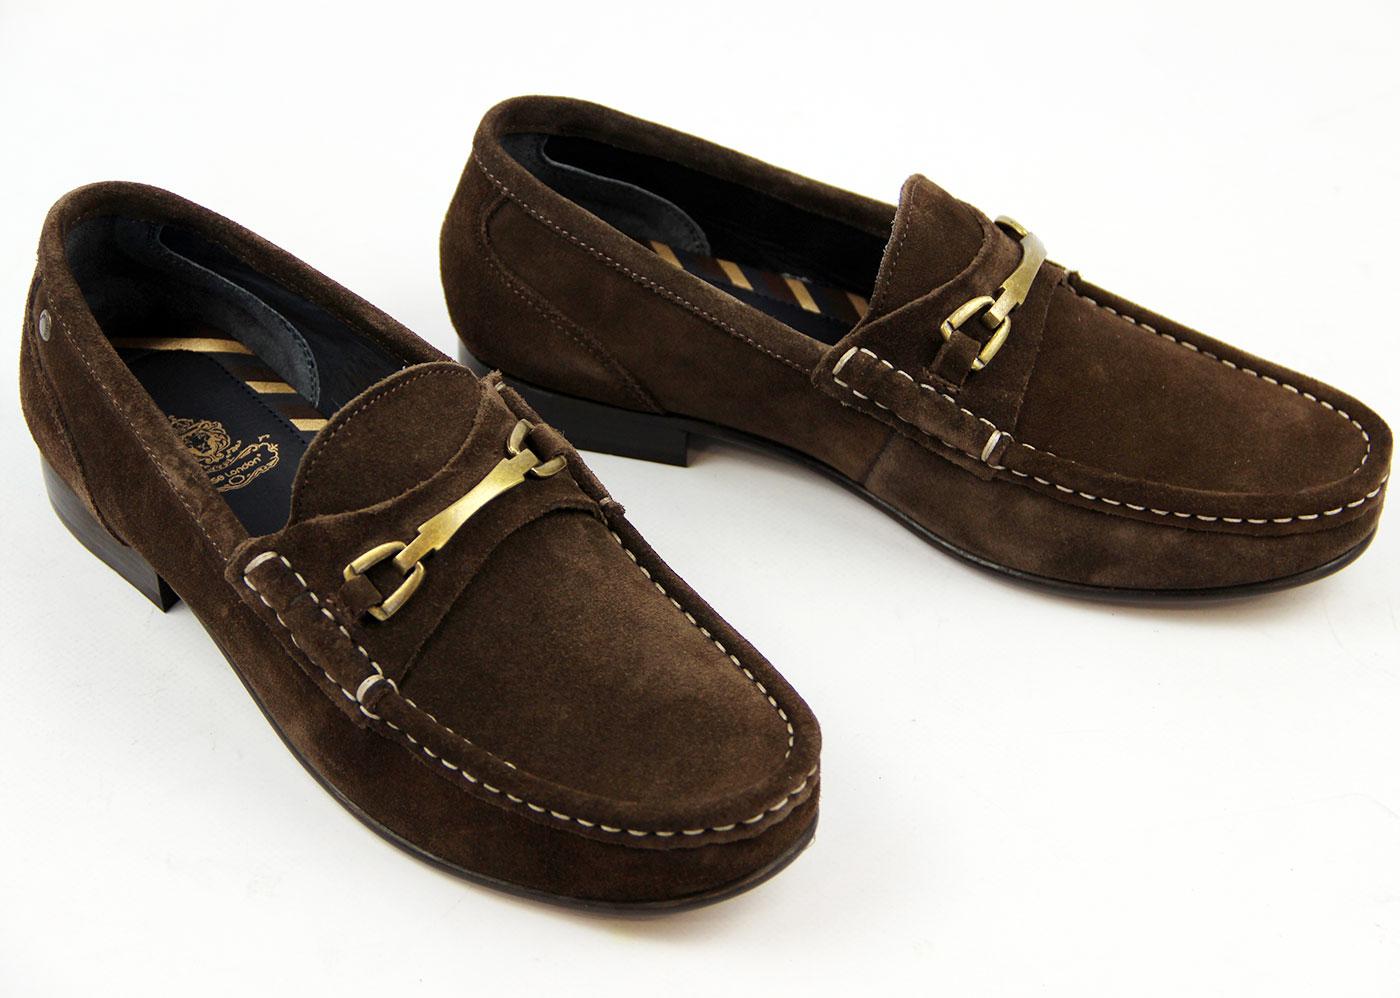 BASE LONDON Journal Retro Mod Suede Saddle Loafer Shoes Brown